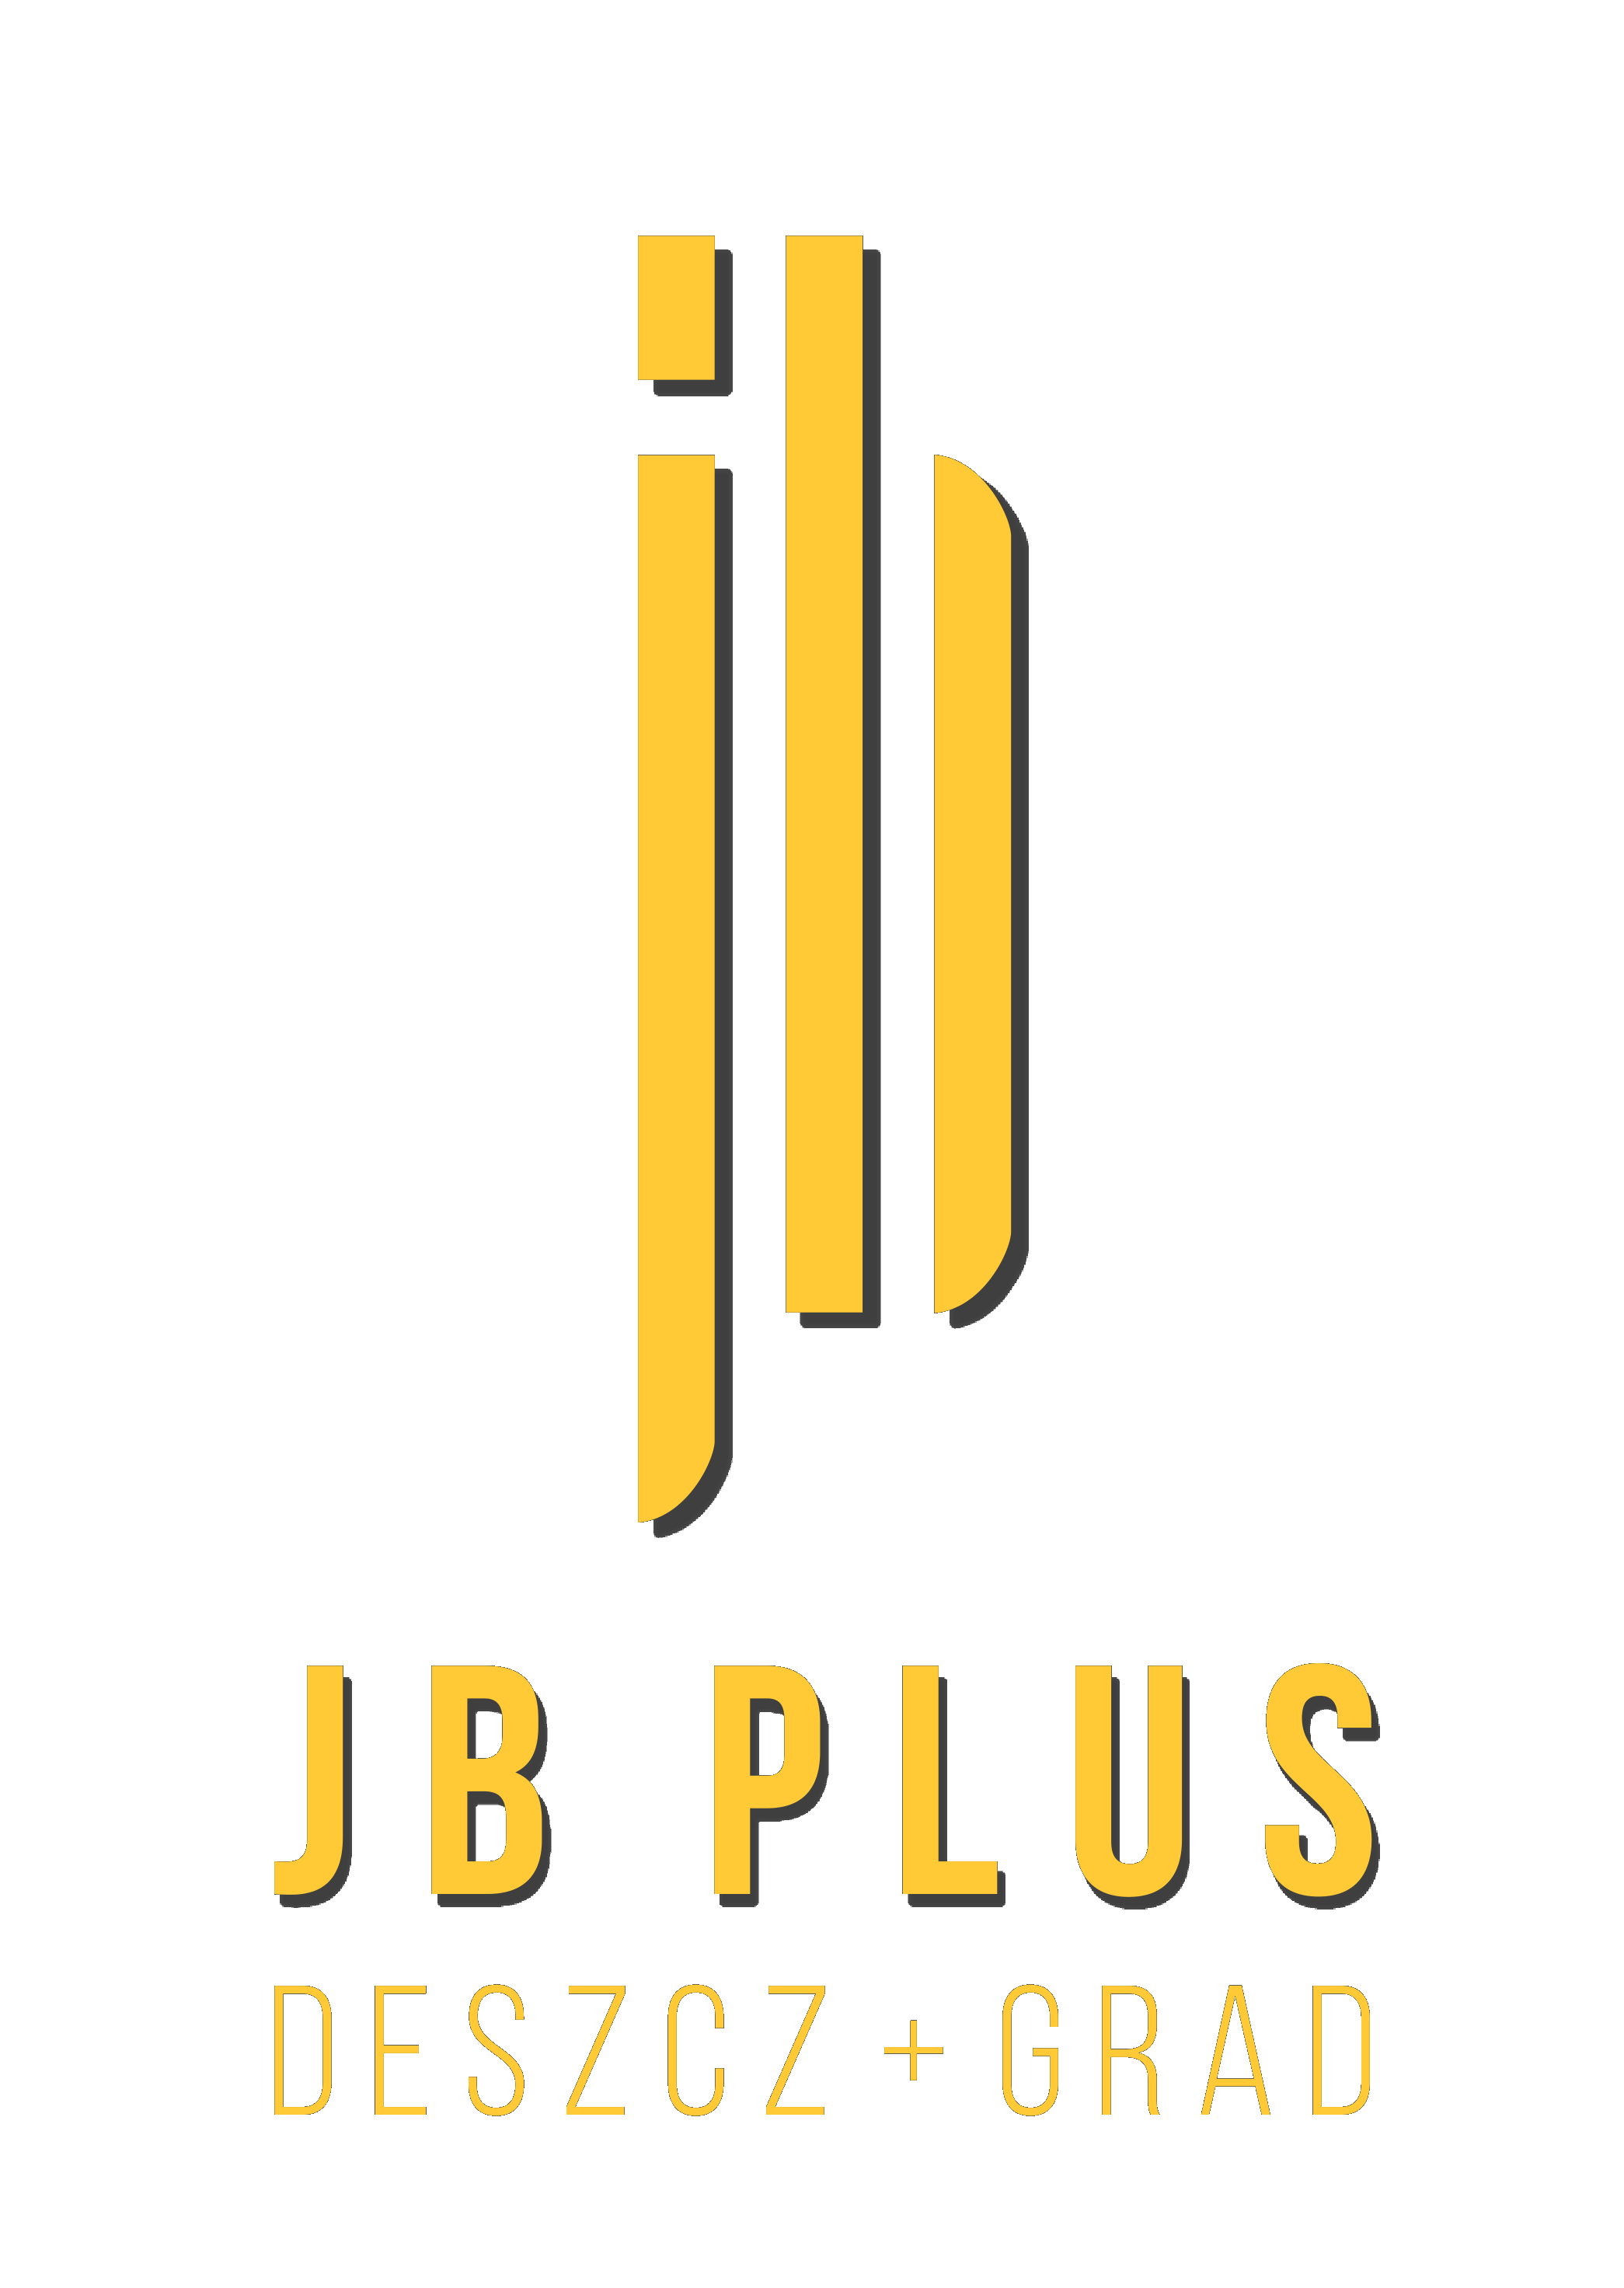 JBplus logo